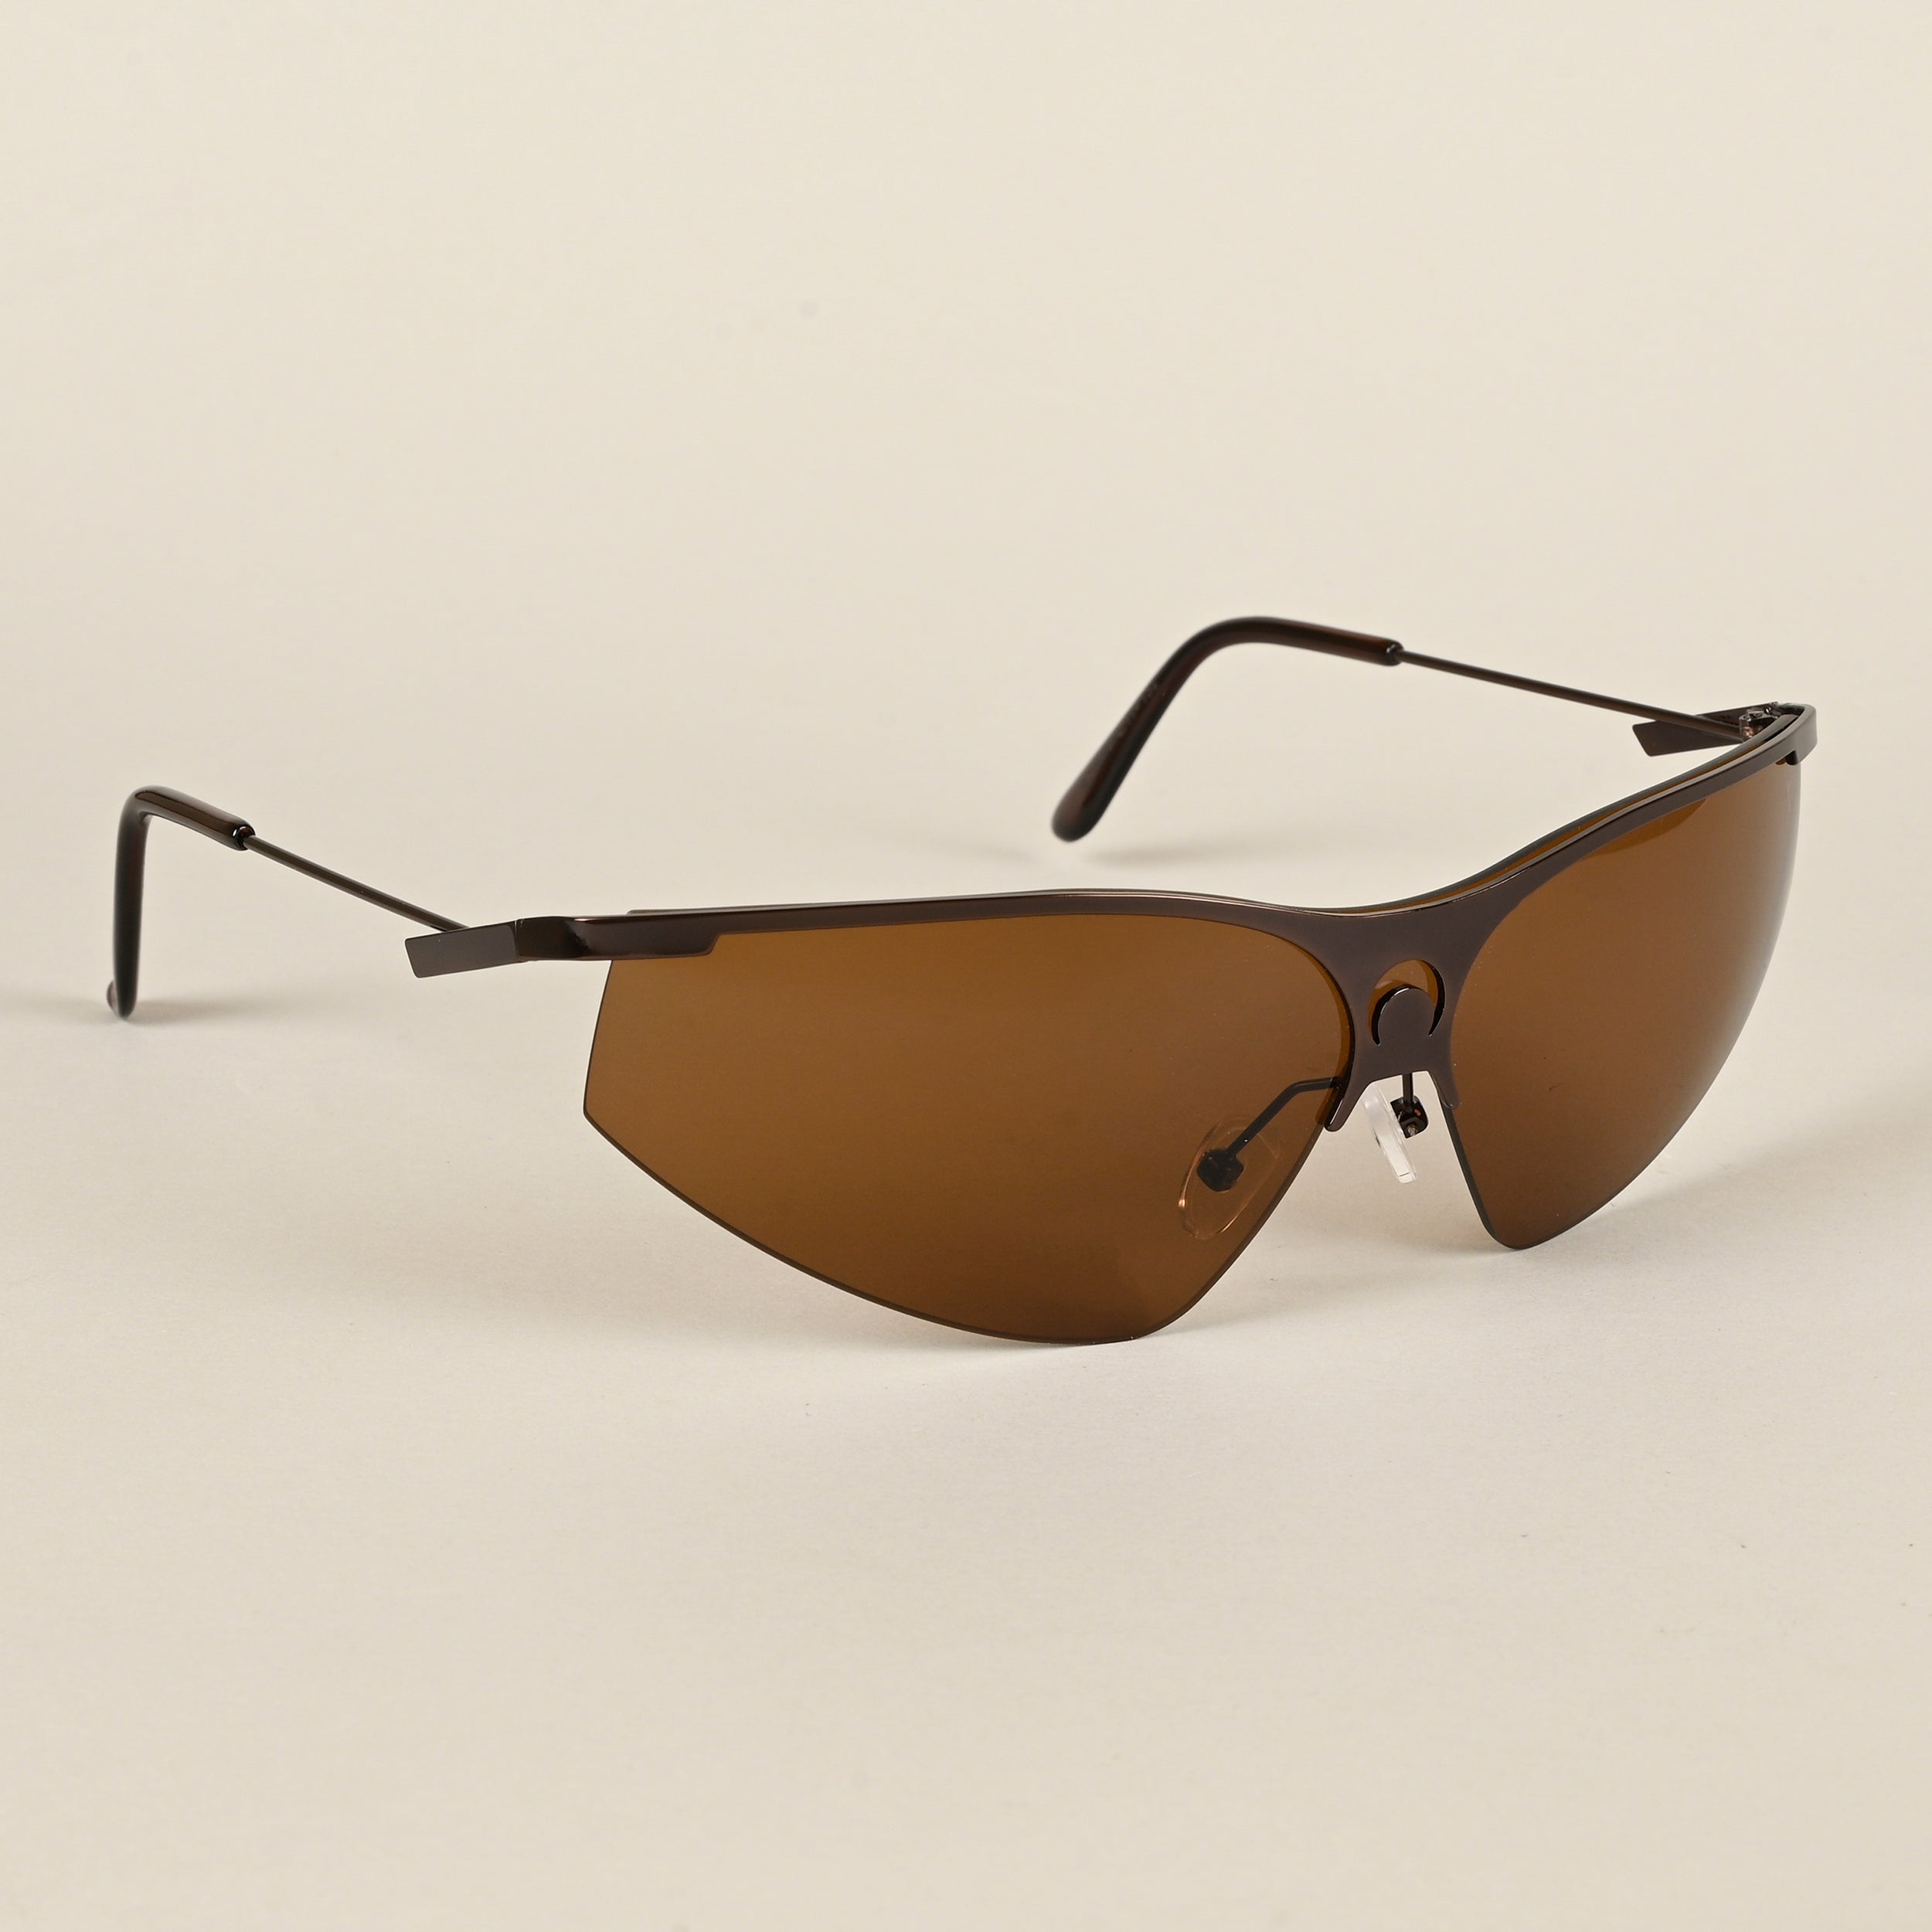 Voyage Brown Wrap-Around Sunglasses for Men & Women - MG4223